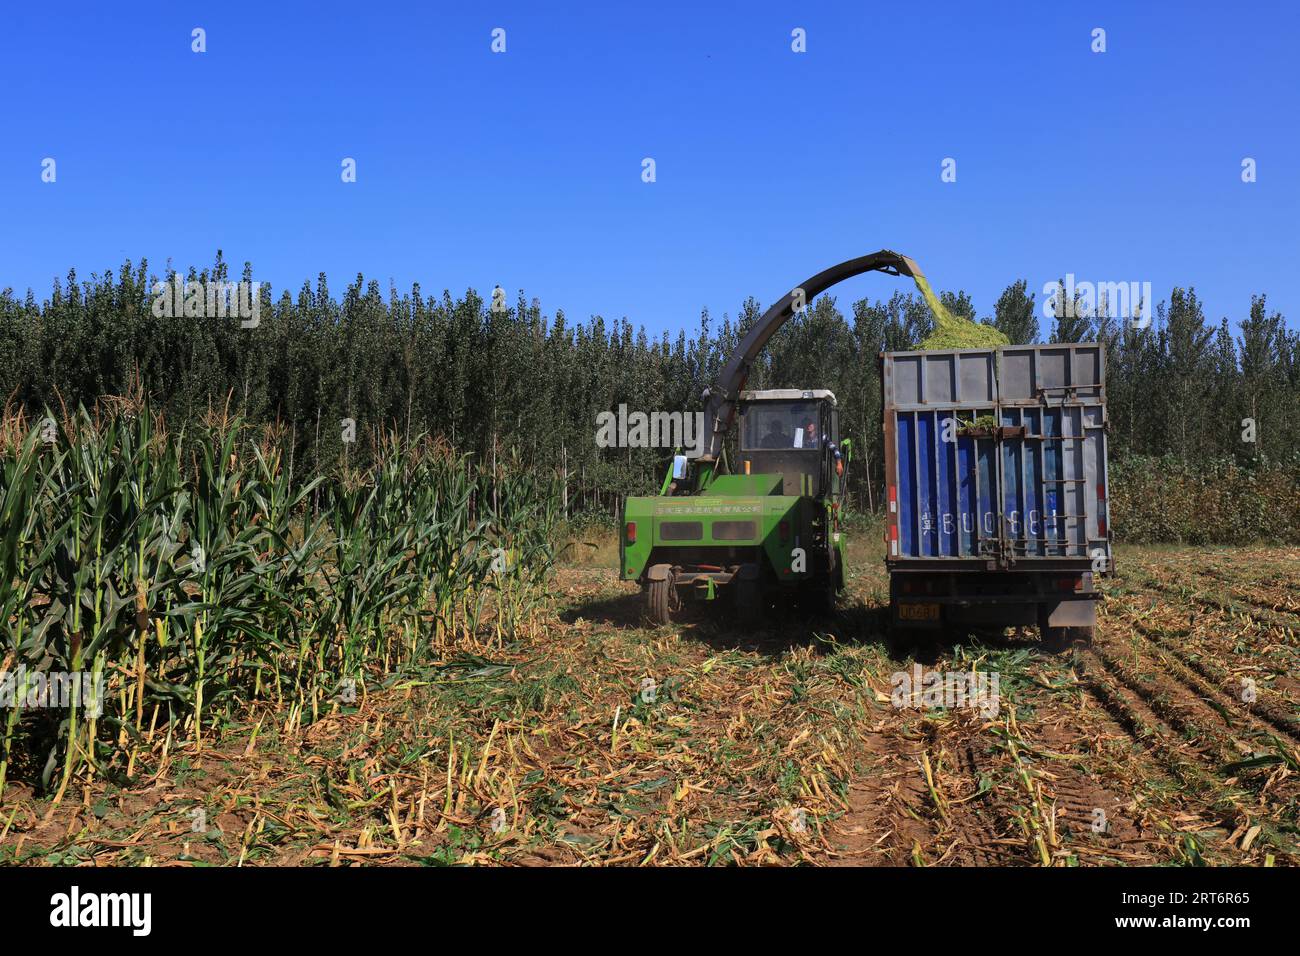 Maissilage-Erntemaschine auf Ackerland, Nordchina Plain Stockfoto